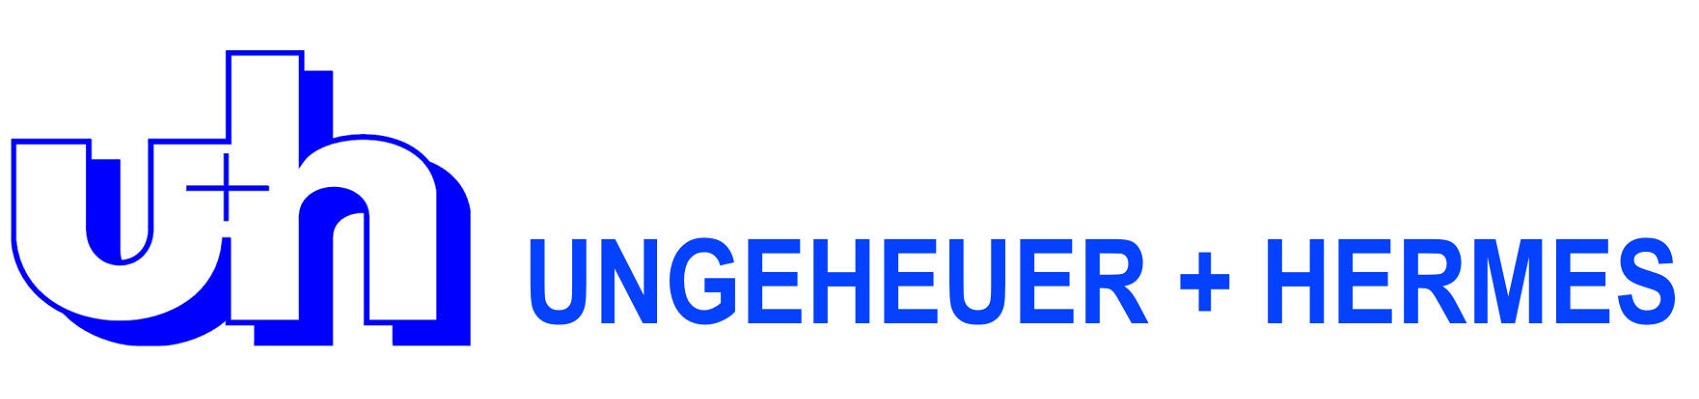 Ungeheuer +
Hermes
GmbH + CO. KG